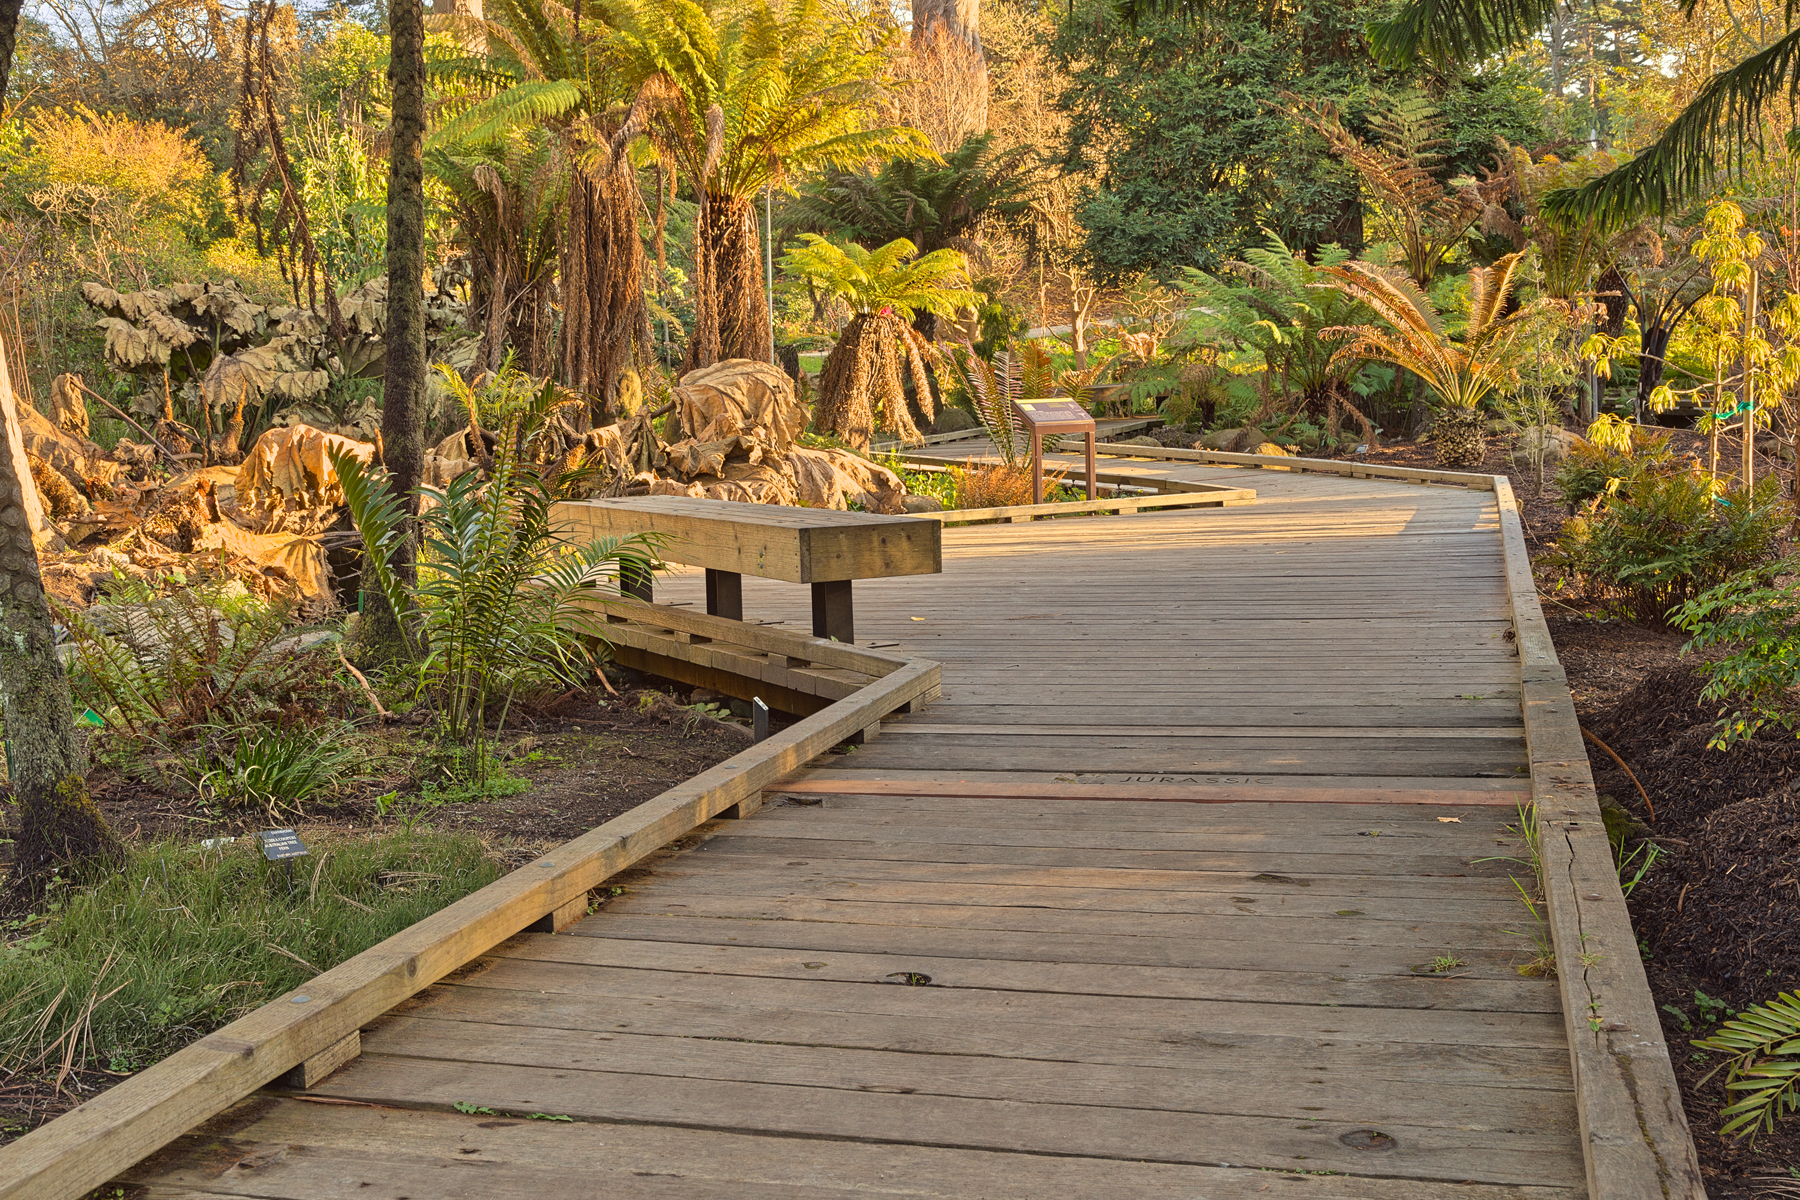 Botanical gardens boardwalk - hdr photo